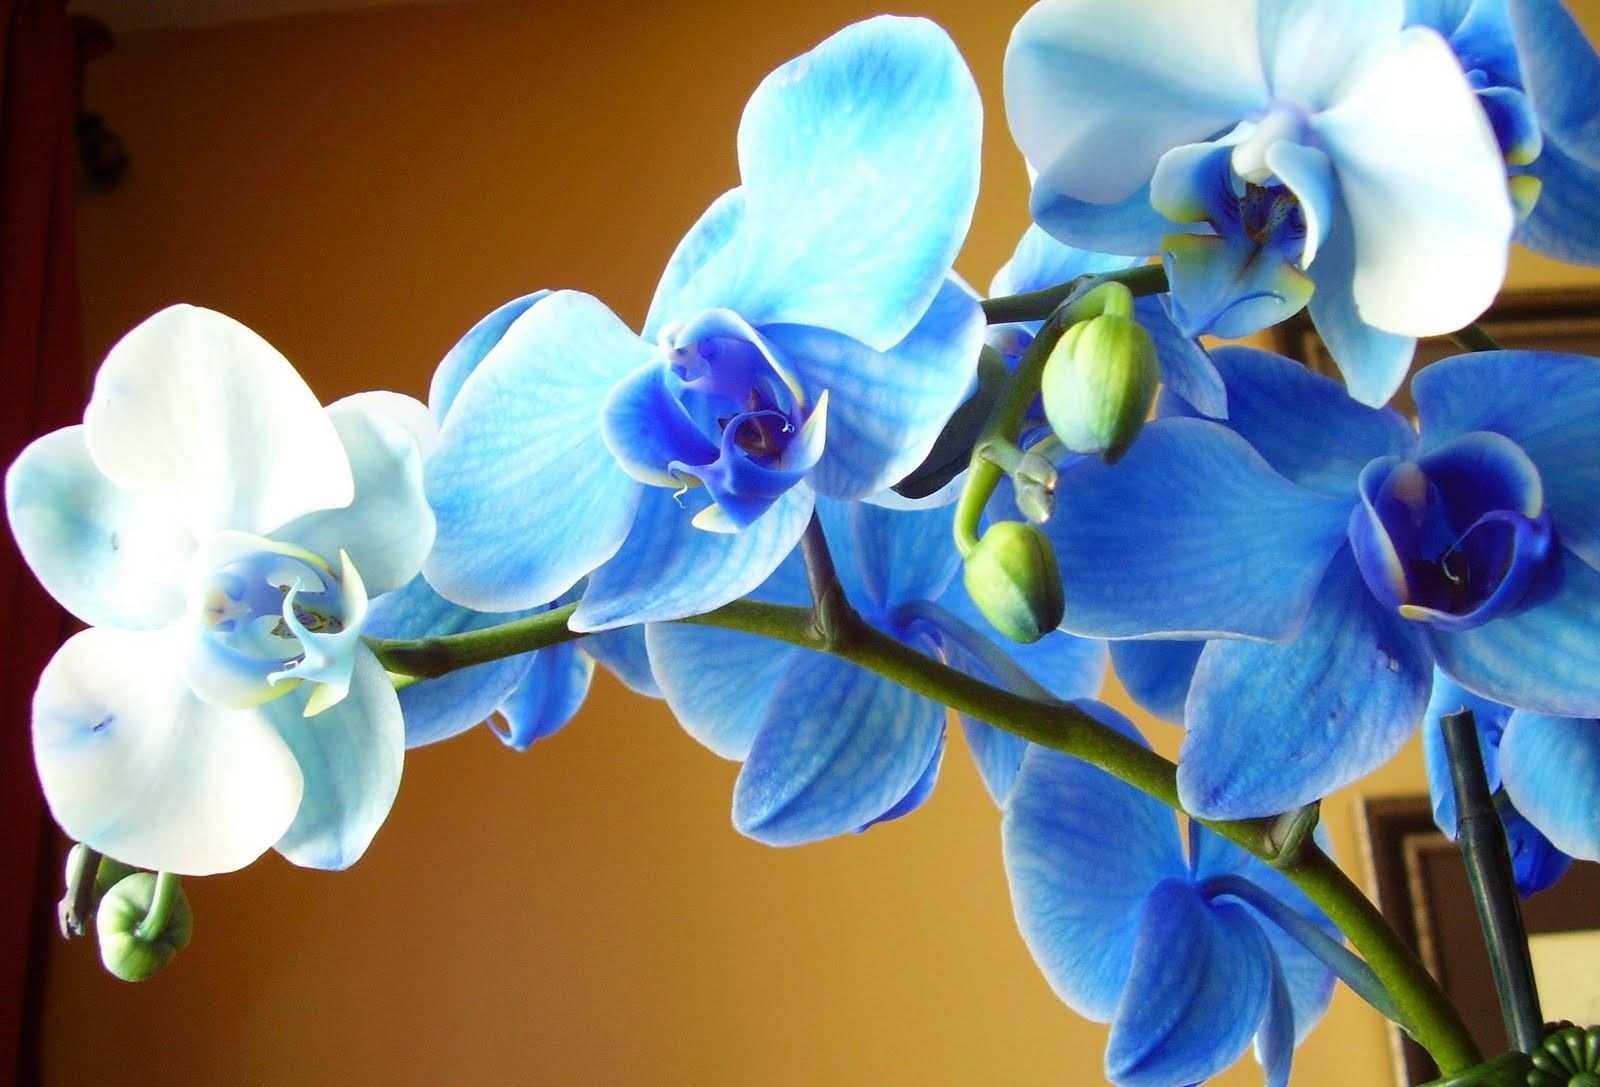 Wonderful blue orchid flower in the sunlight - Beautiful flowers and plants Wallpaper. HD Wallpaper Download fo. Blue orchid flower, Blue orchids, Orchid flower